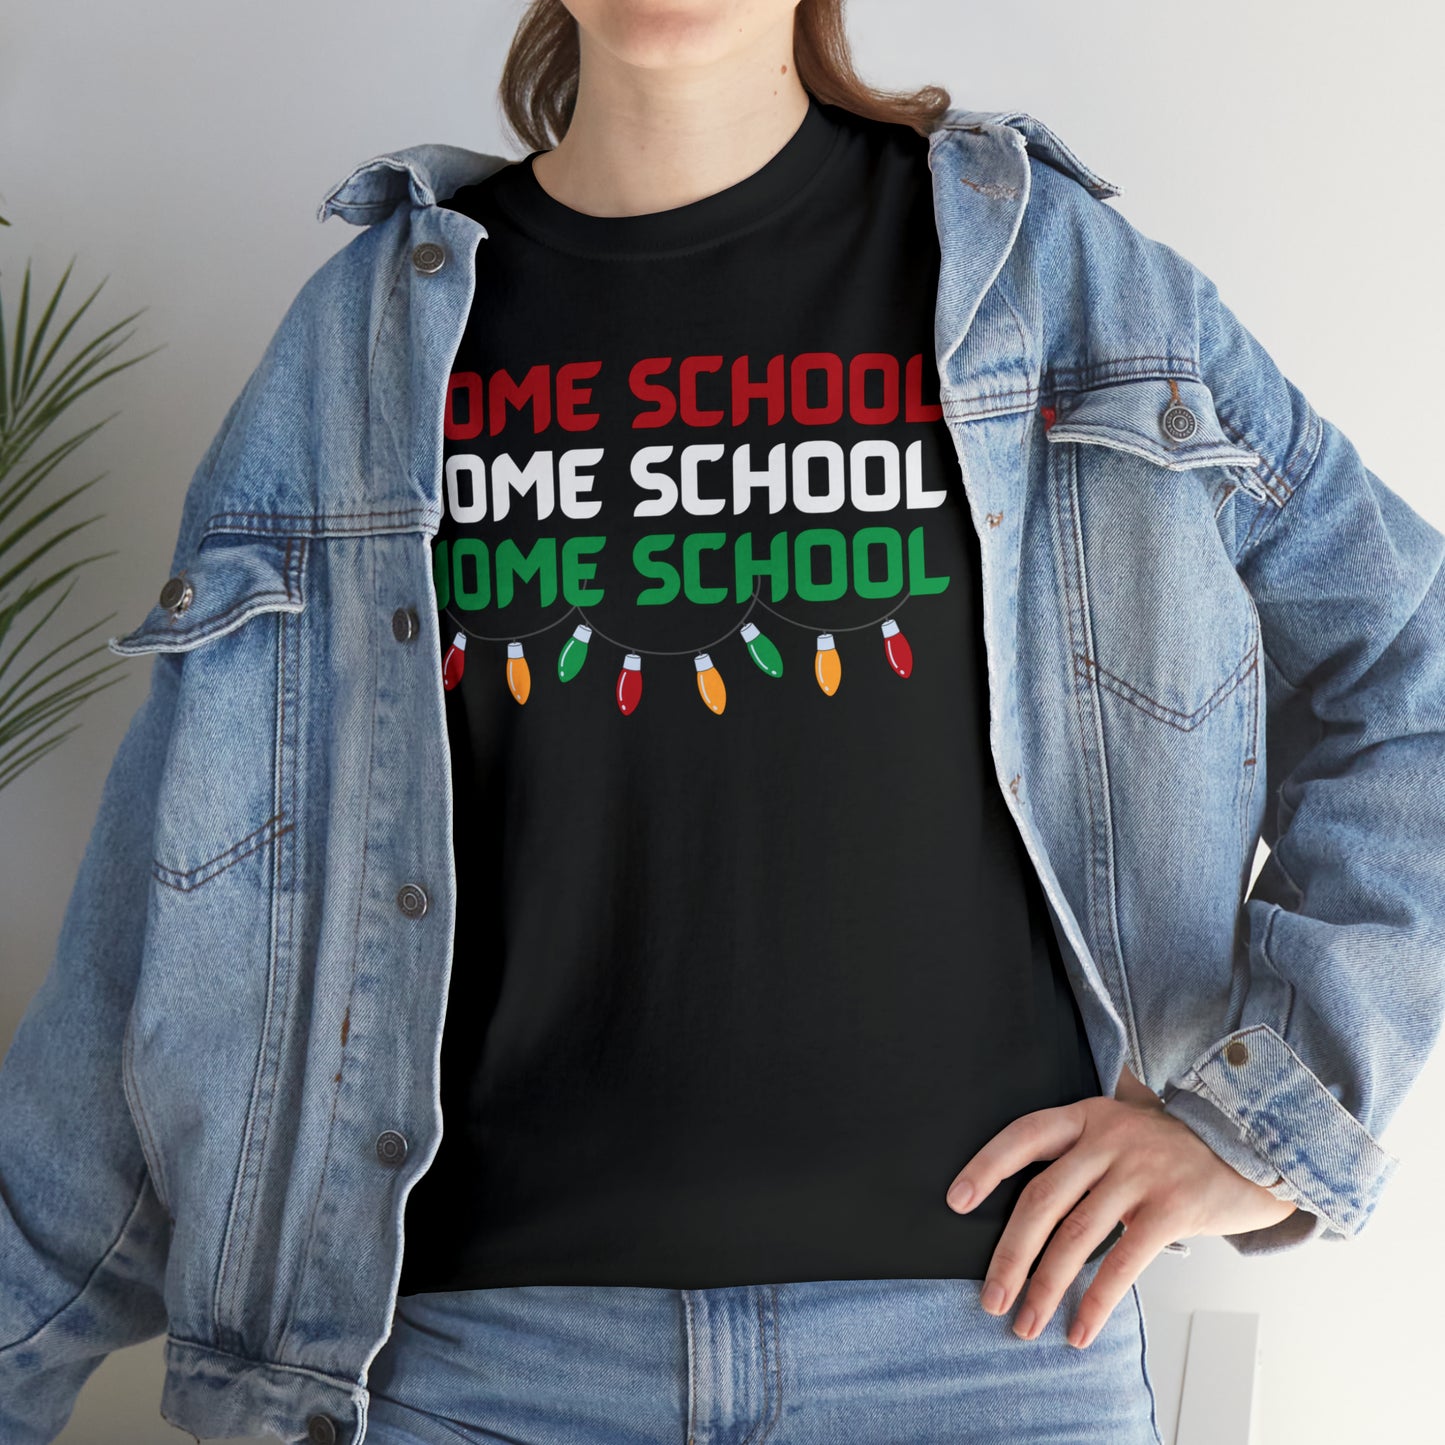 T-Shirt - Home School Christmas | Classic Fit | 100% Cotton | Heavy Cotton